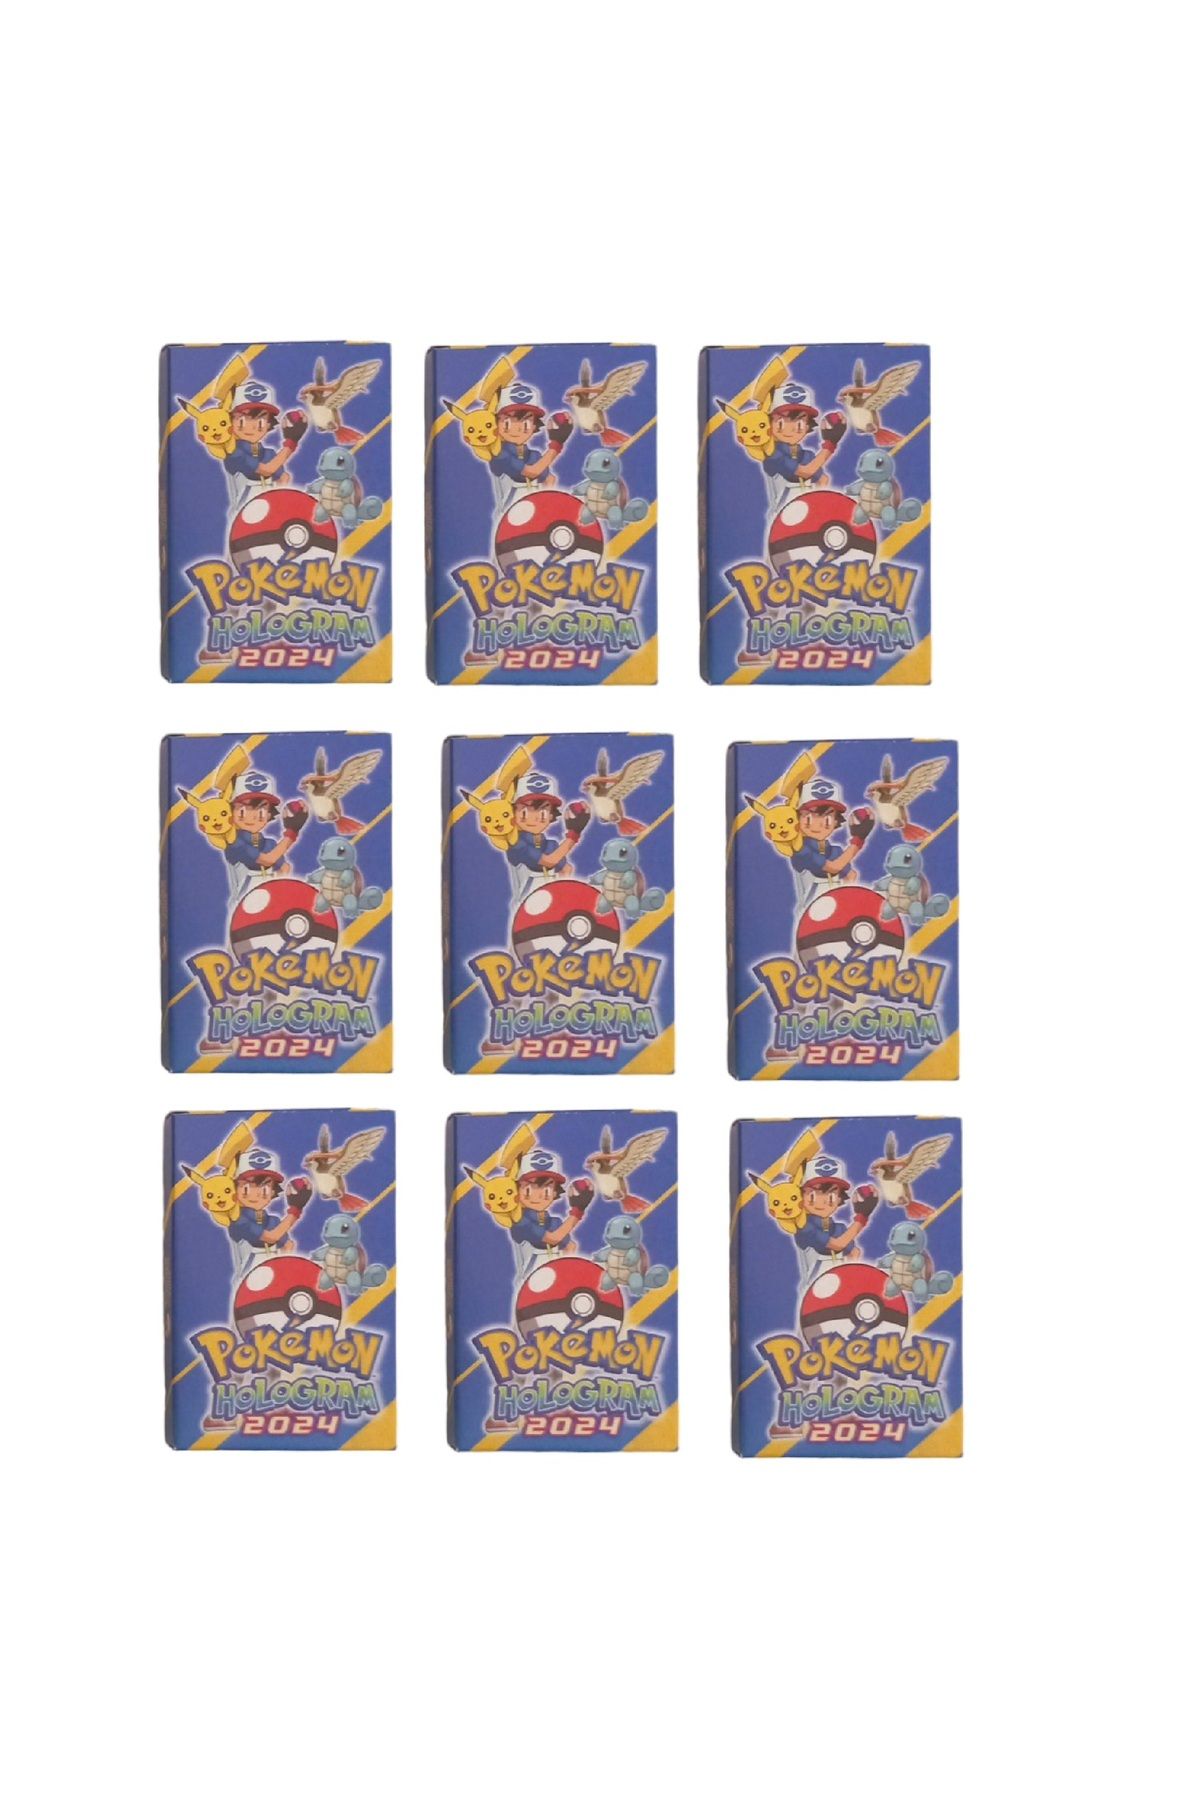 Redro Home Pokemon 2024 Sürpriz Hologramlı Oyun Kartı 12 Paket İçinde Toplam 120 Adet Kart